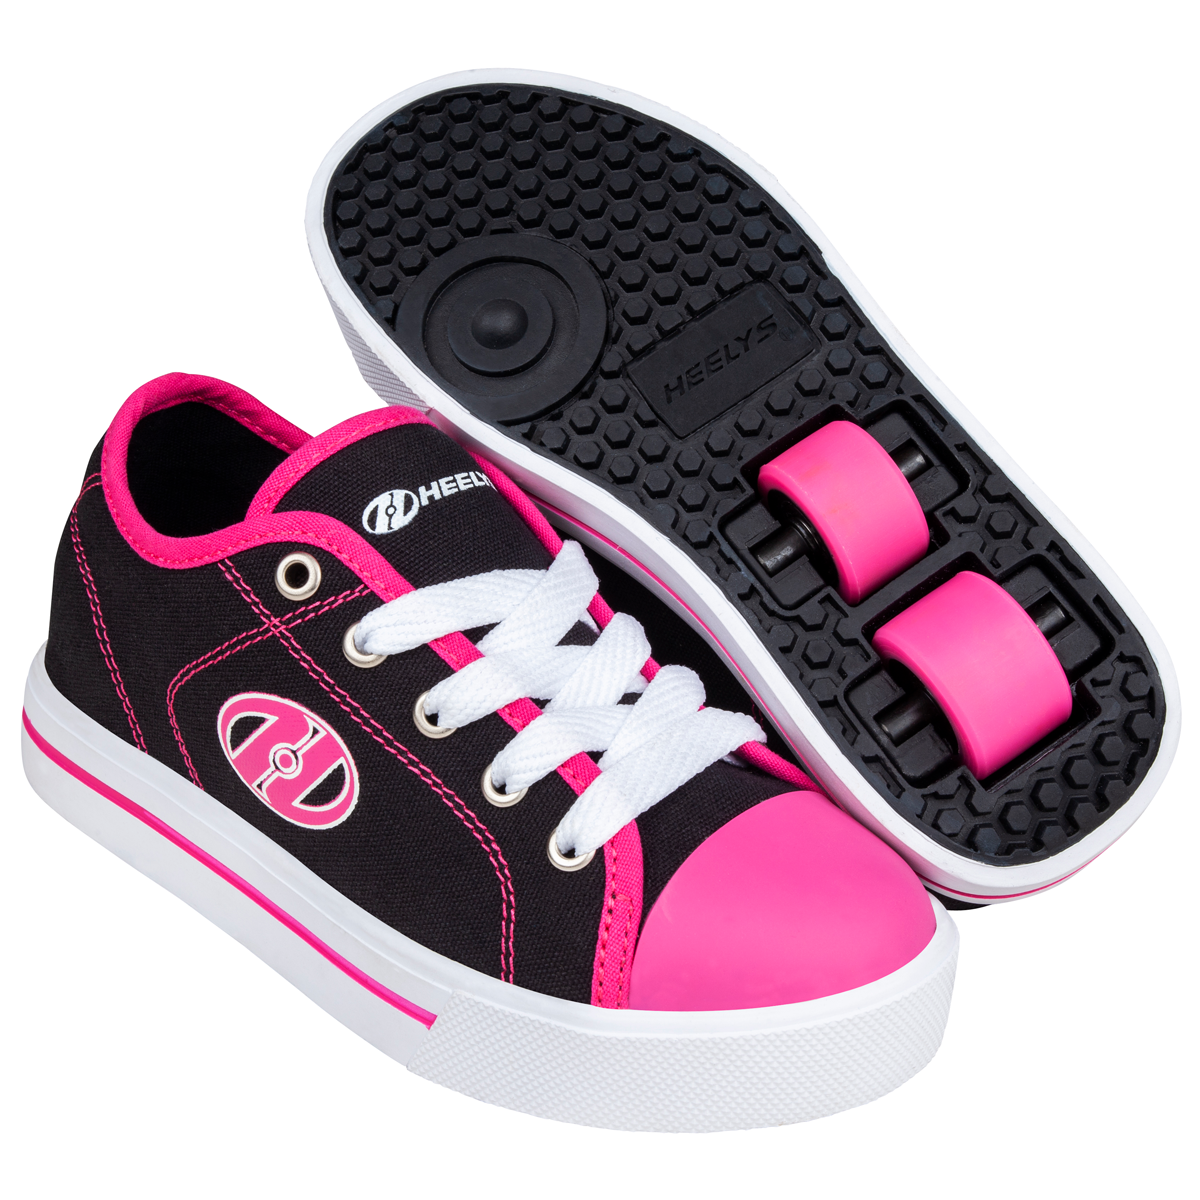 UK Heelys Heelys Shoes For Girls Size 3 